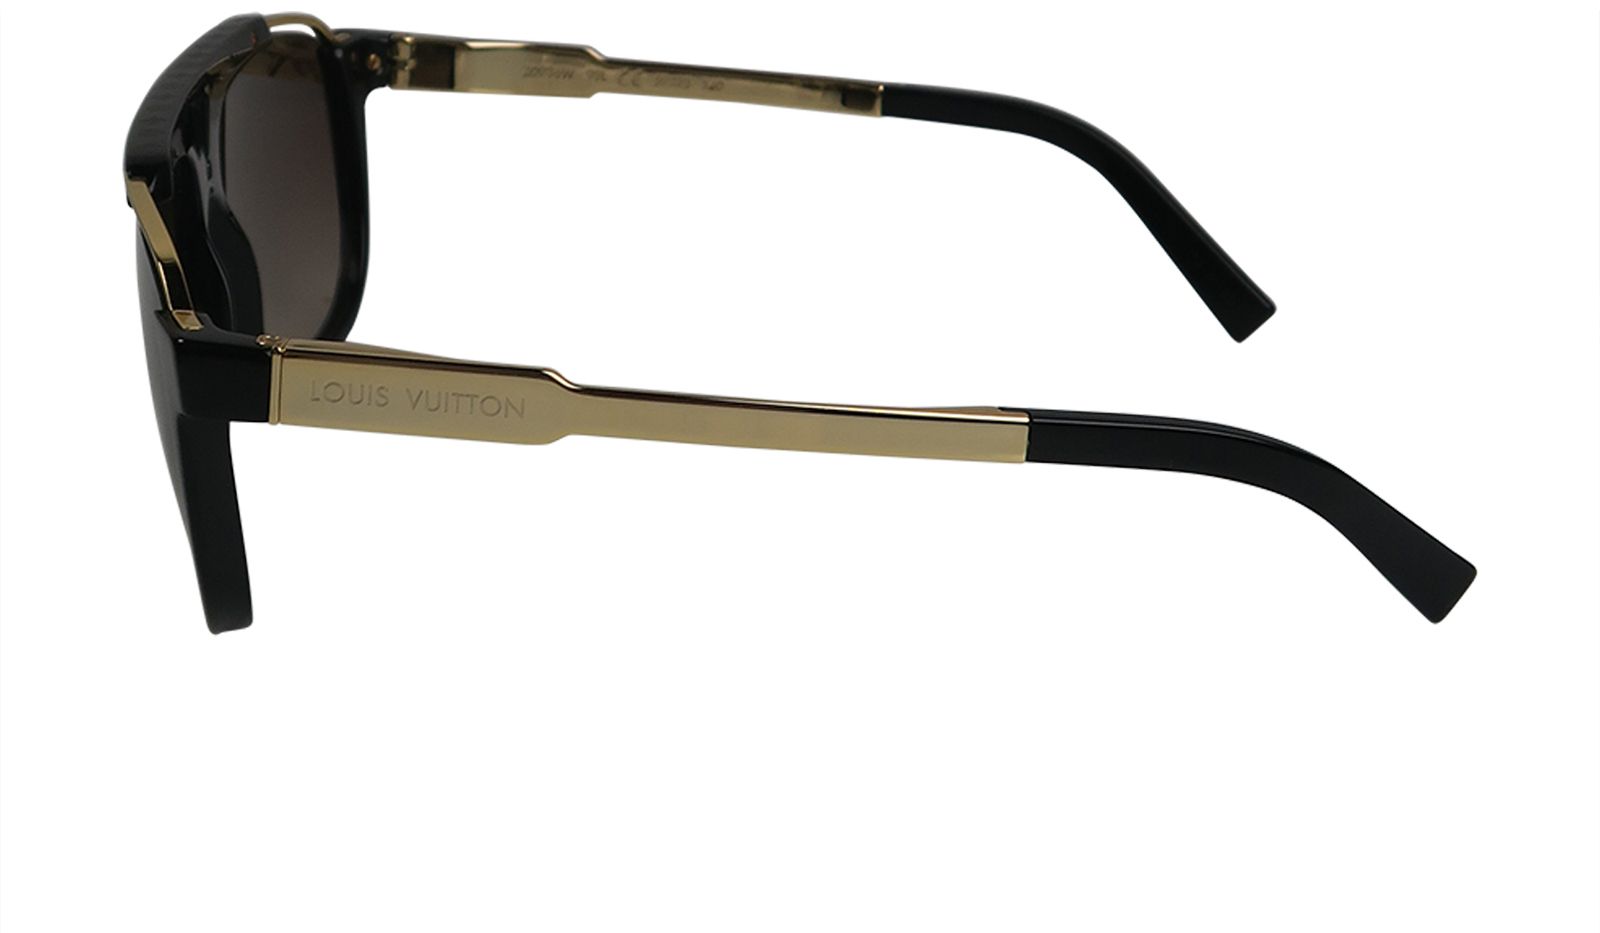 Louis Vuitton Mascot Sun Glasses, Men's Fashion, Watches & Accessories,  Sunglasses & Eyewear on Carousell